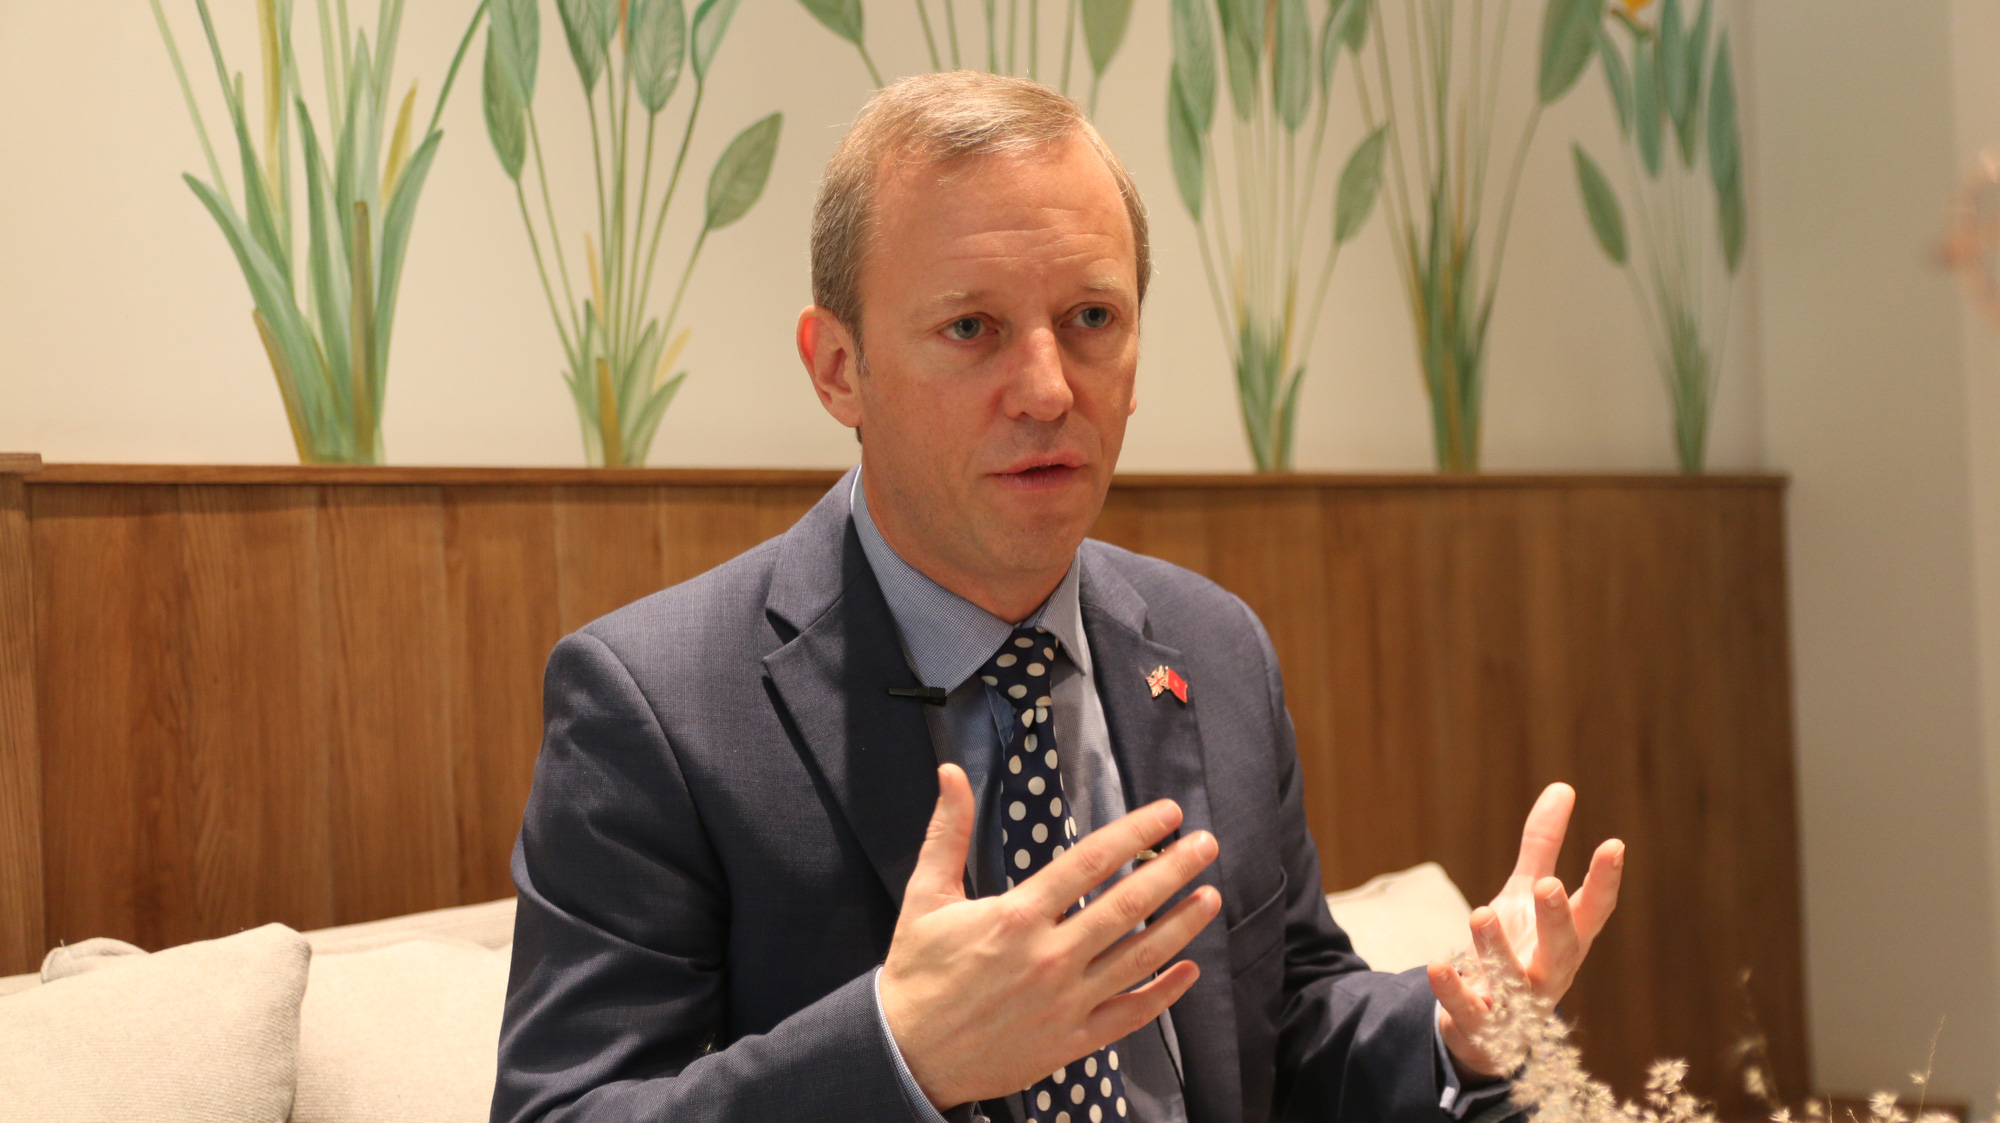 Vietnam to lead Southeast Asia on sustainable energy transition: UK ambassador